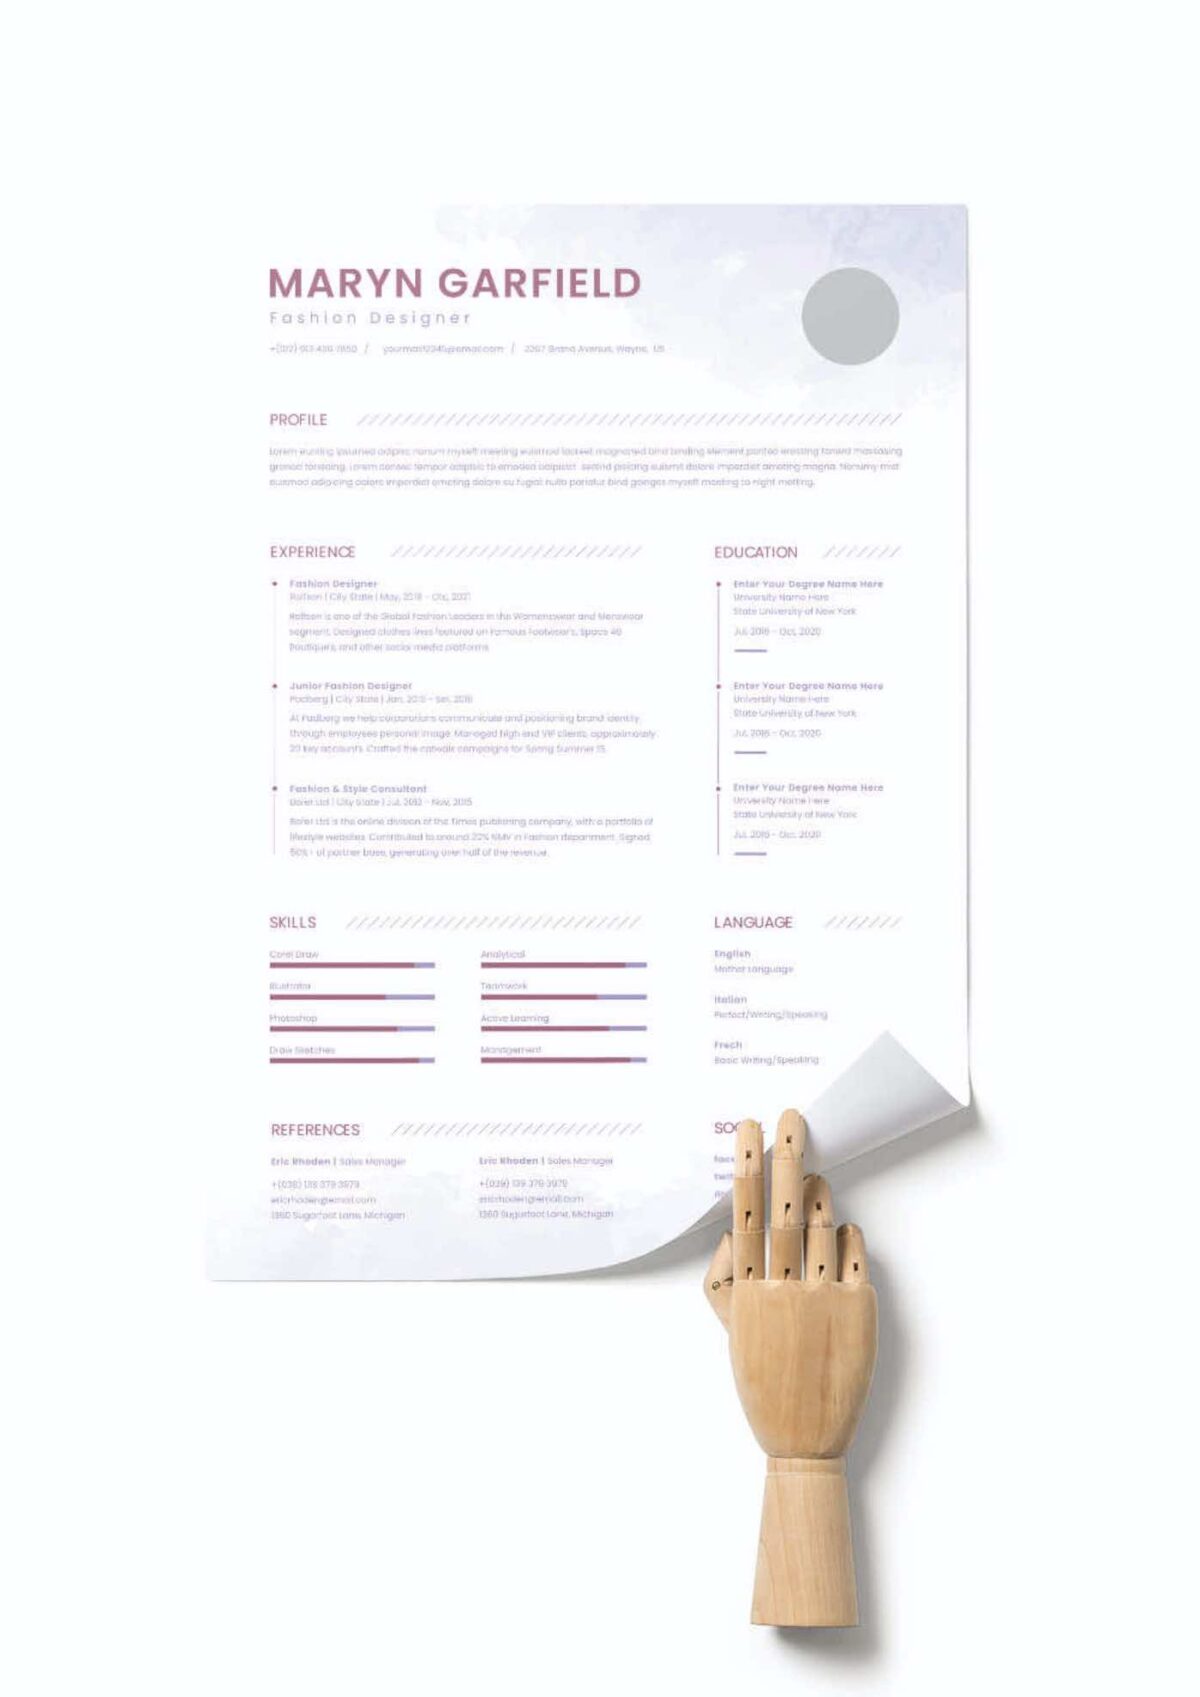 CV #8 Maryn Garfield